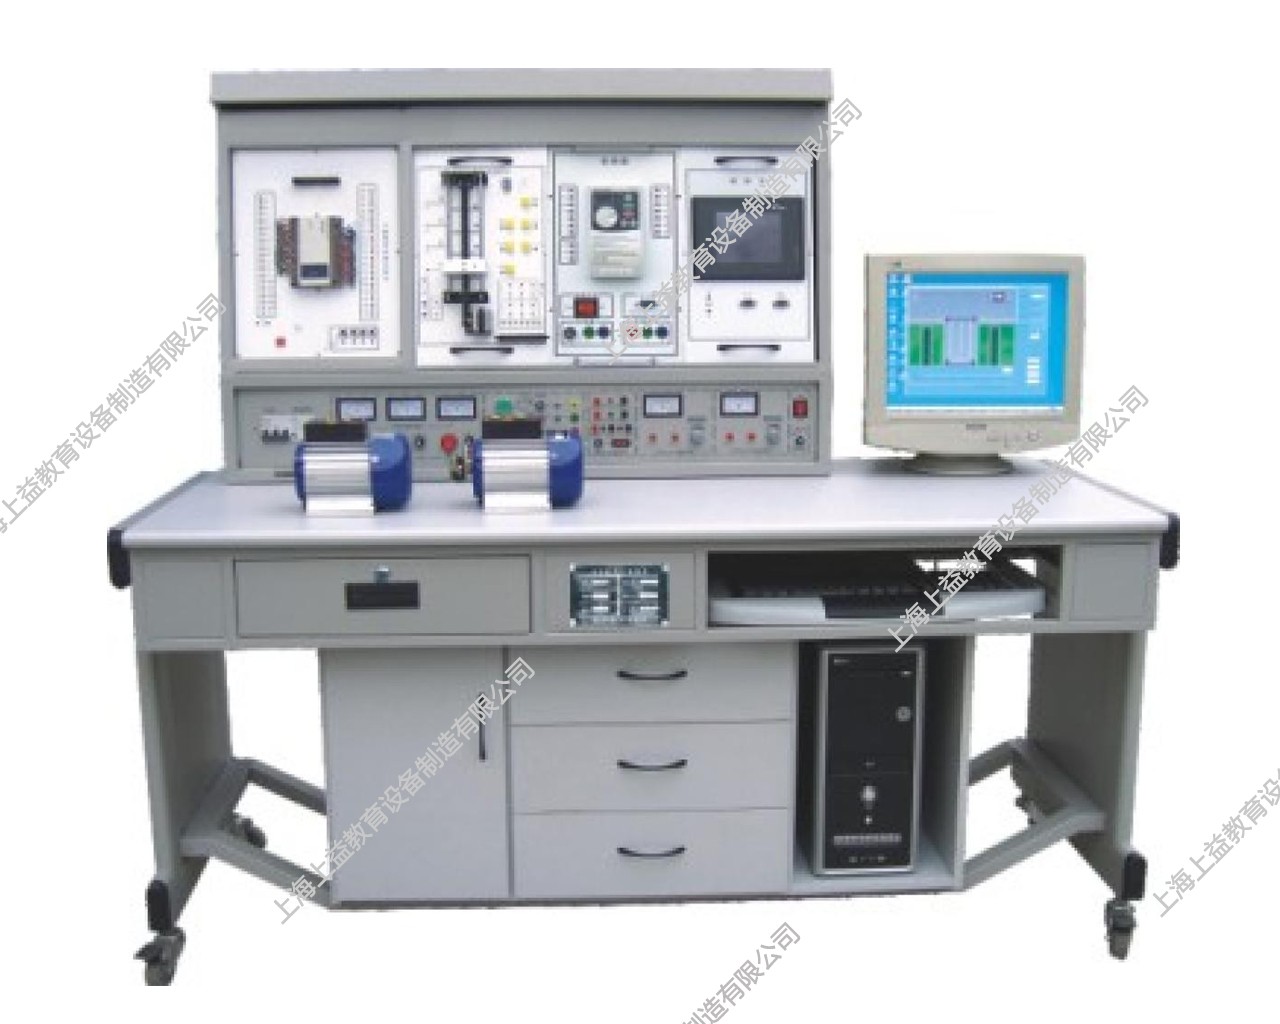 SYPLC-104C網絡型PLC可編程控制器/變頻調速/電氣控制及微機接口綜合實驗裝置（PLC、變頻器、觸摸屏、電氣控制、微機接口）